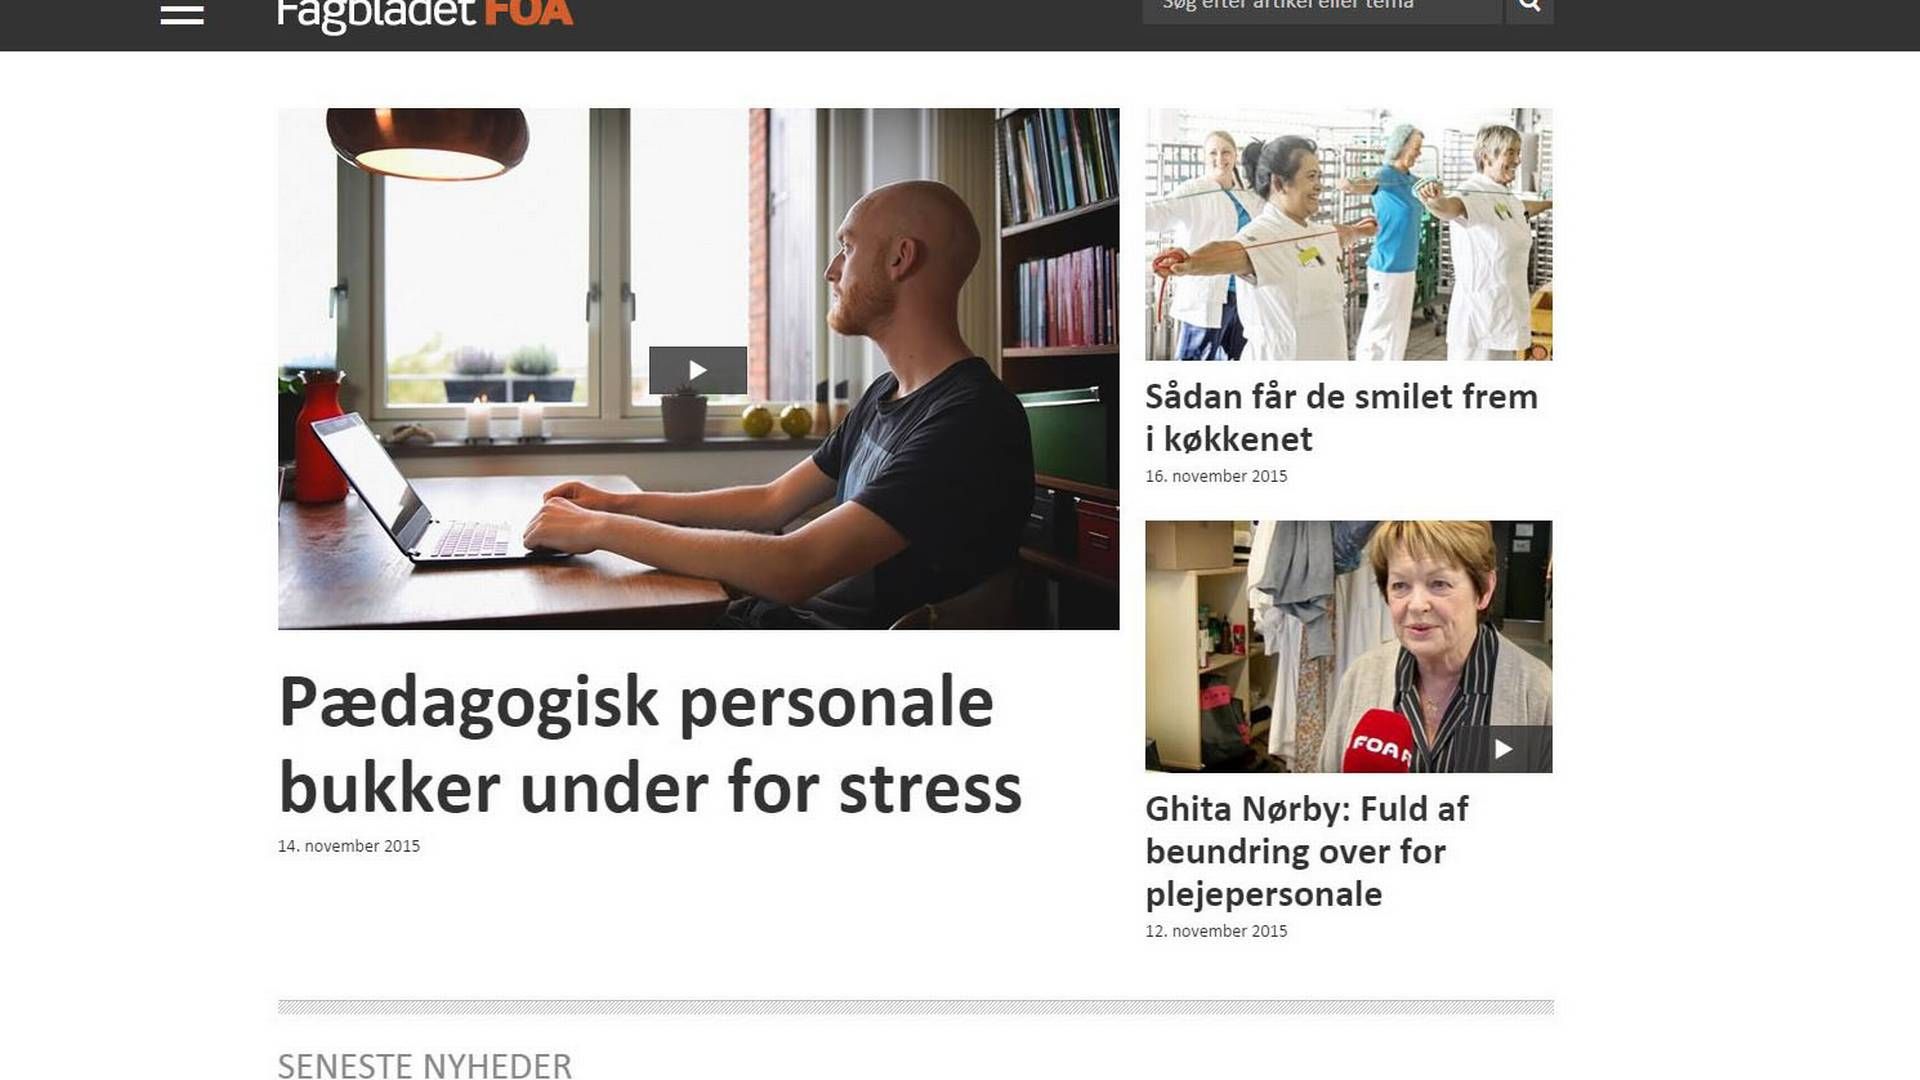 Foto: Screenshot fra Fagbladetfoa.dk